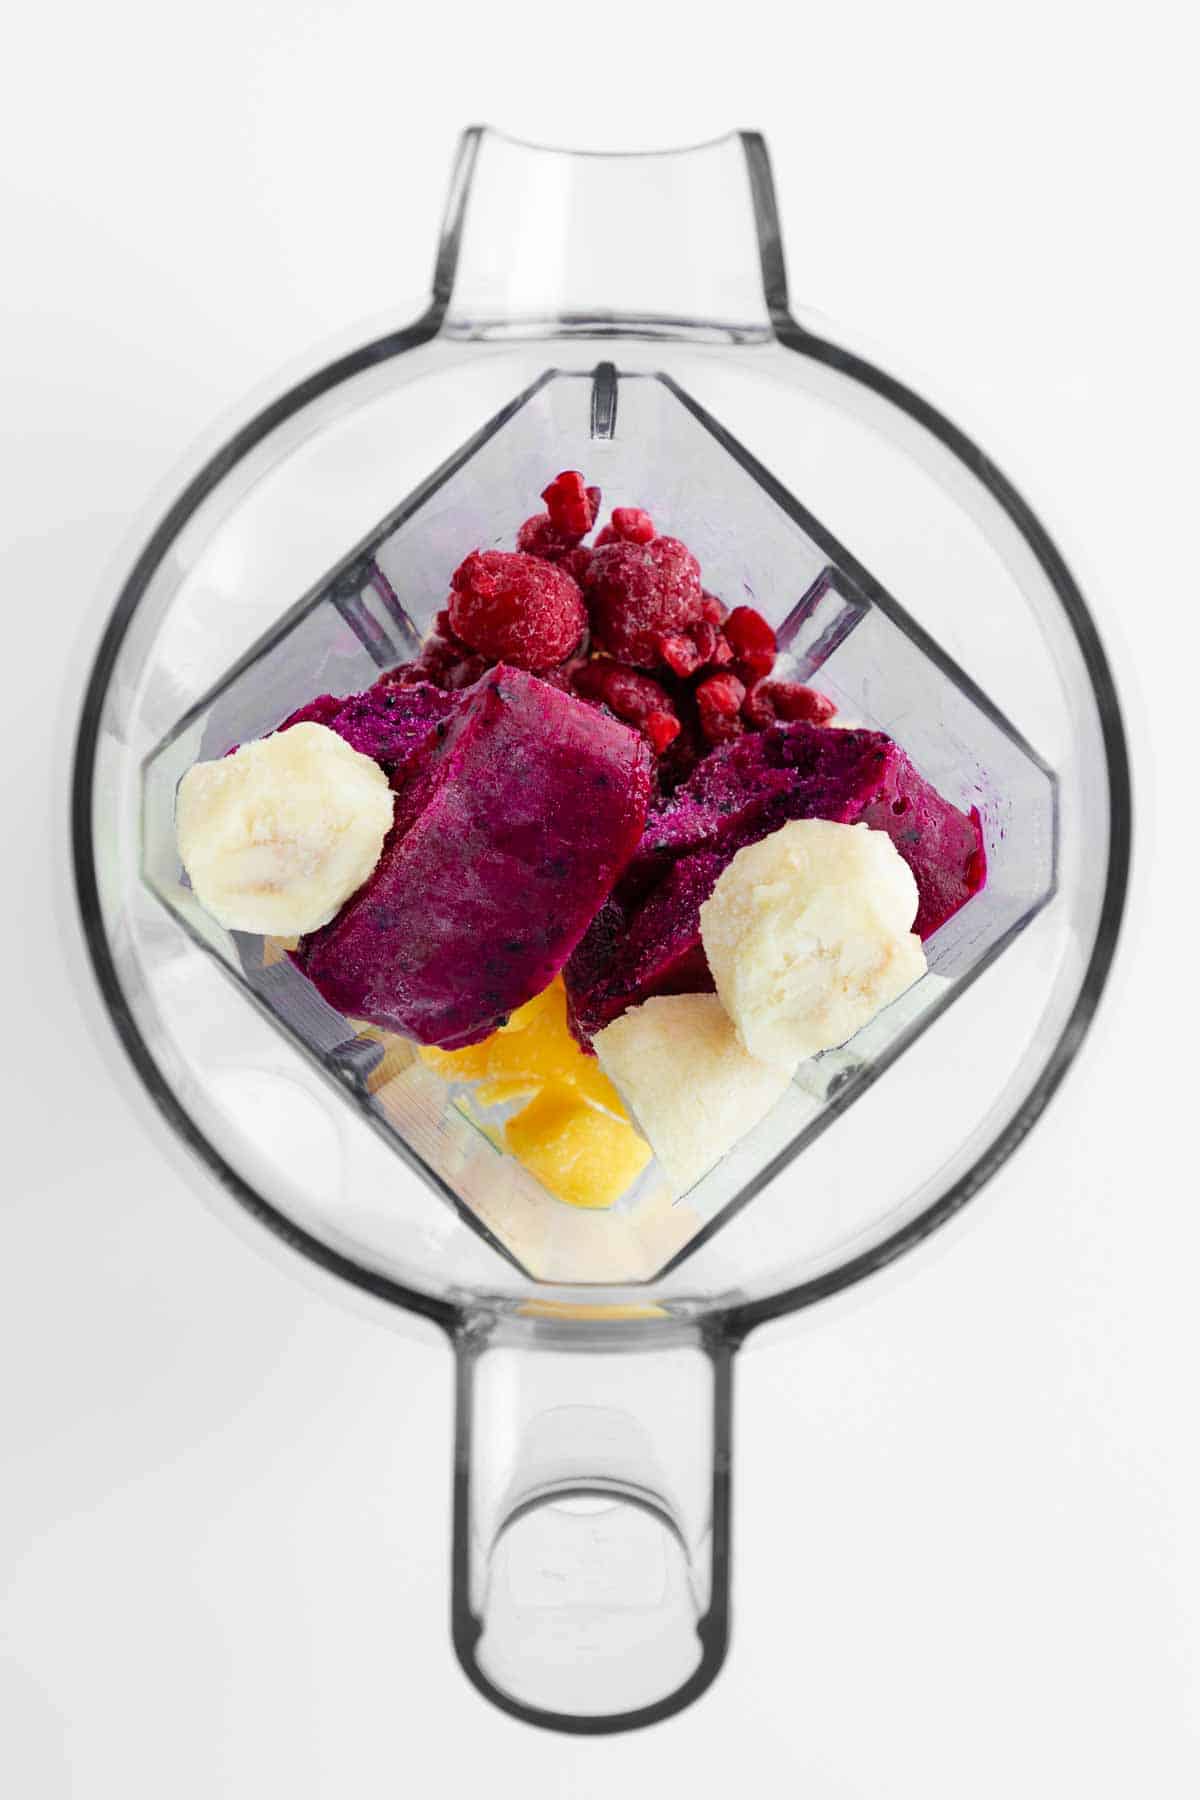 frozen pitaya packet, frozen bananas, mango chunks, and raspberries inside a vitamix blender